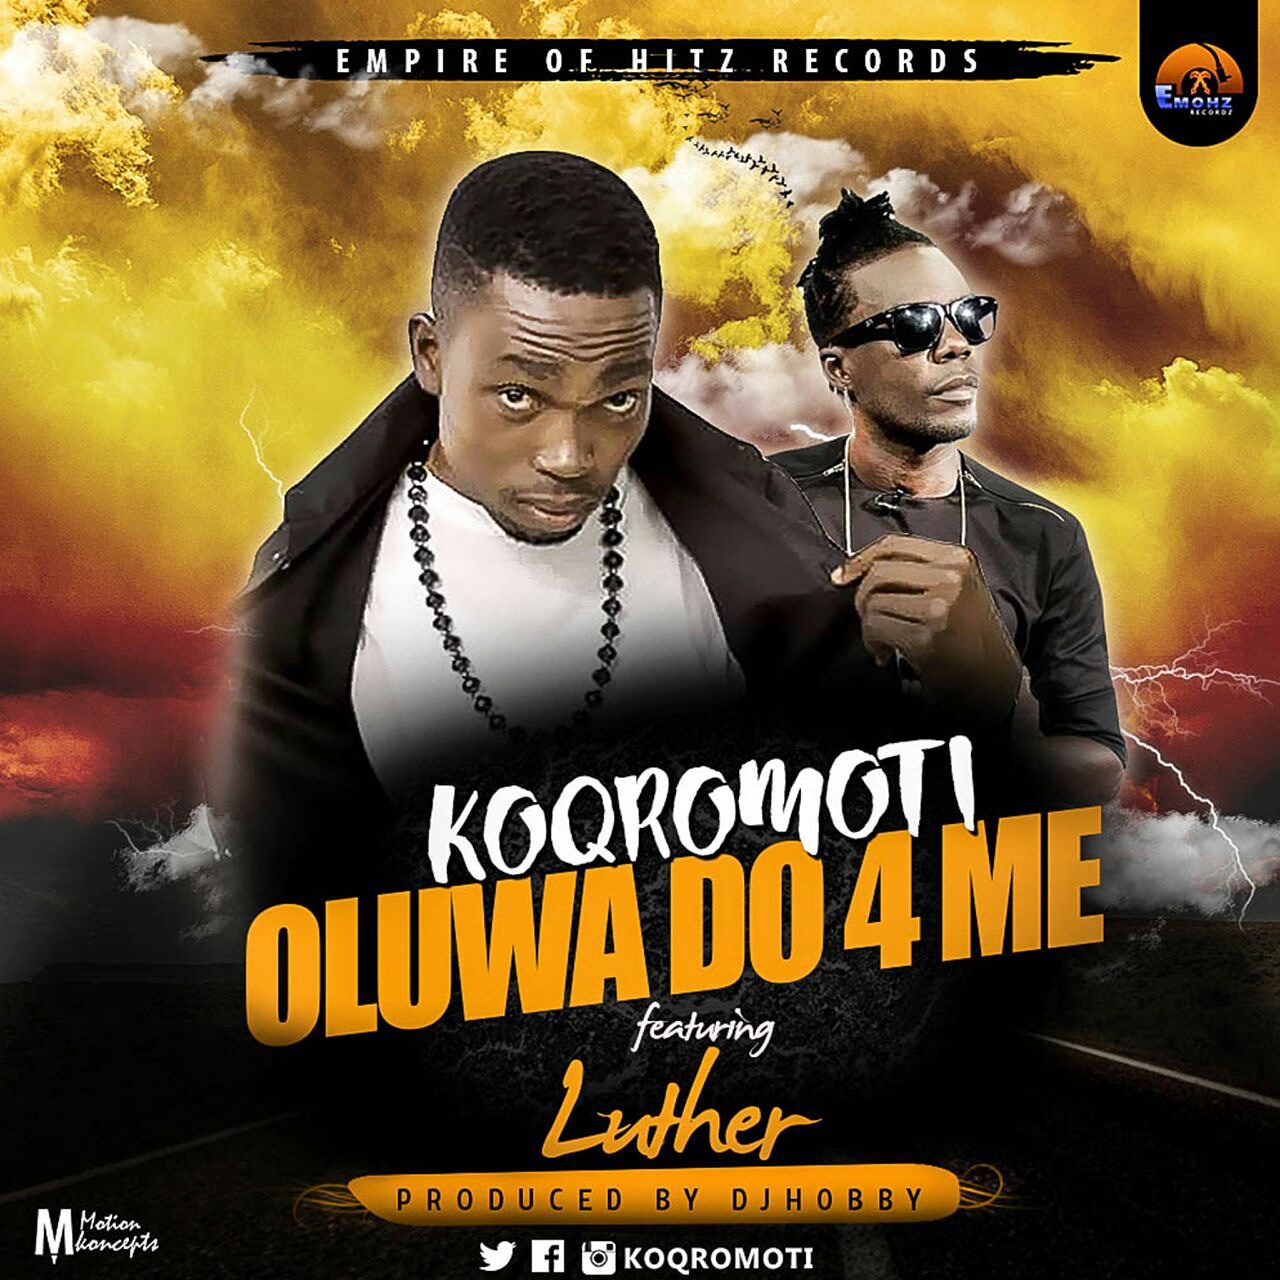 Listen Up: Koqromoti ft Luther – Oluwa Do For Me (Prod by Dj Hobby).